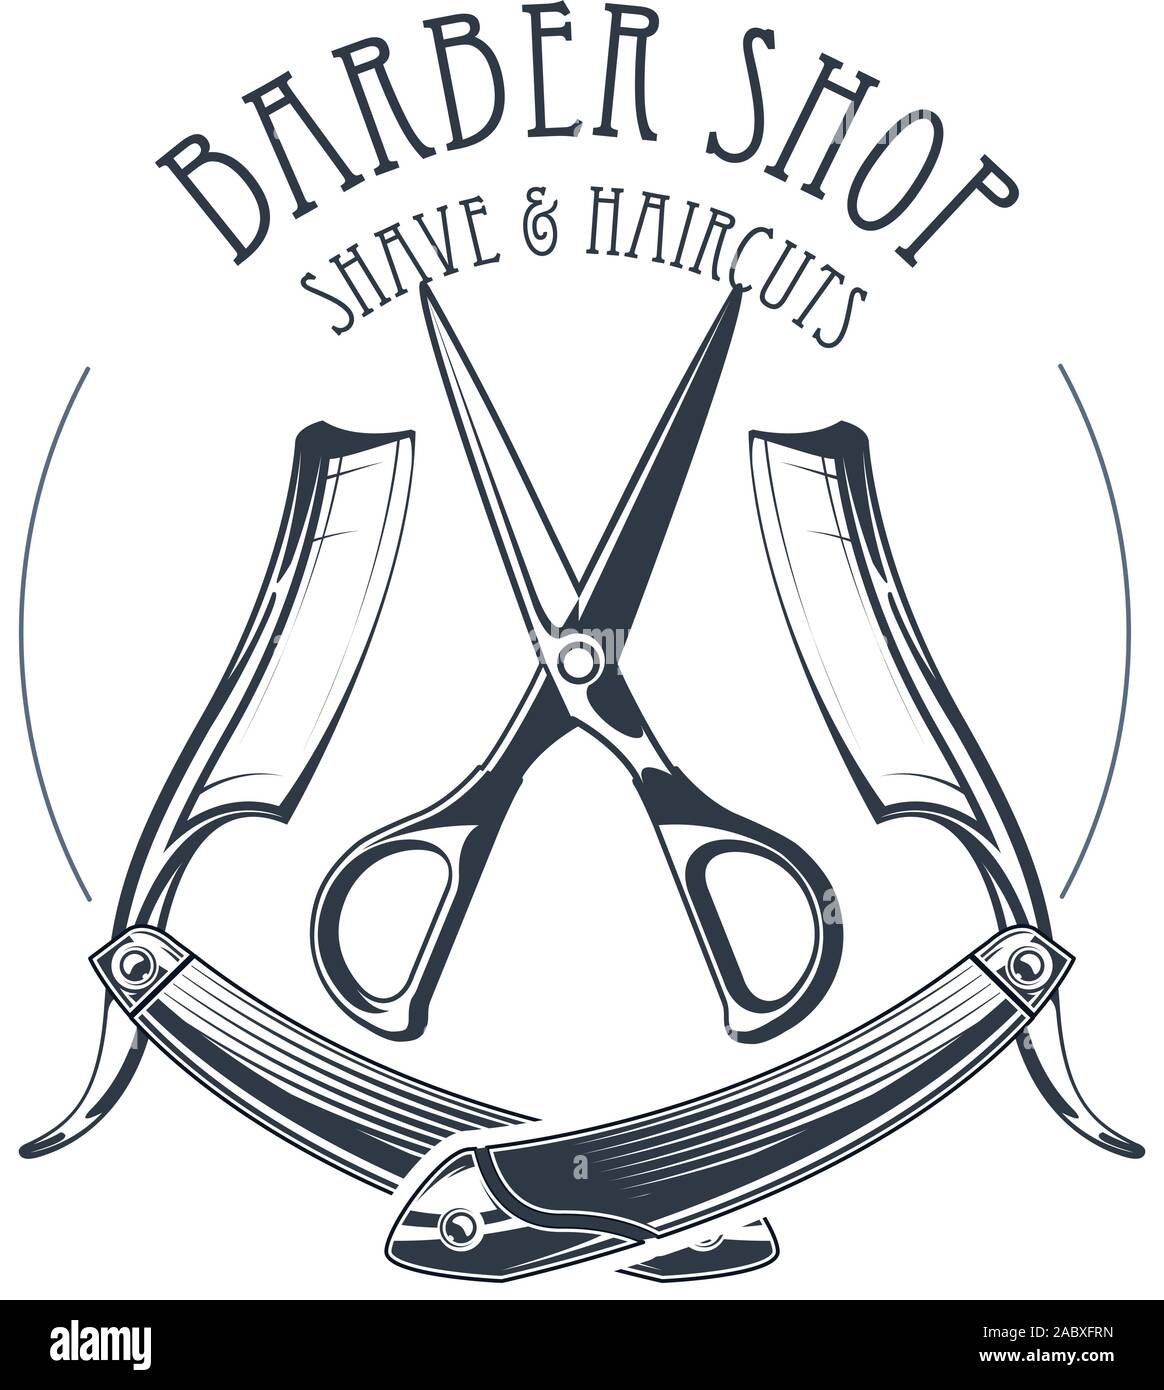 Vintage barbershop oder Friseursalon Emblem, Schere und alte Rasiermesser, Friseur logo Stock Vektor